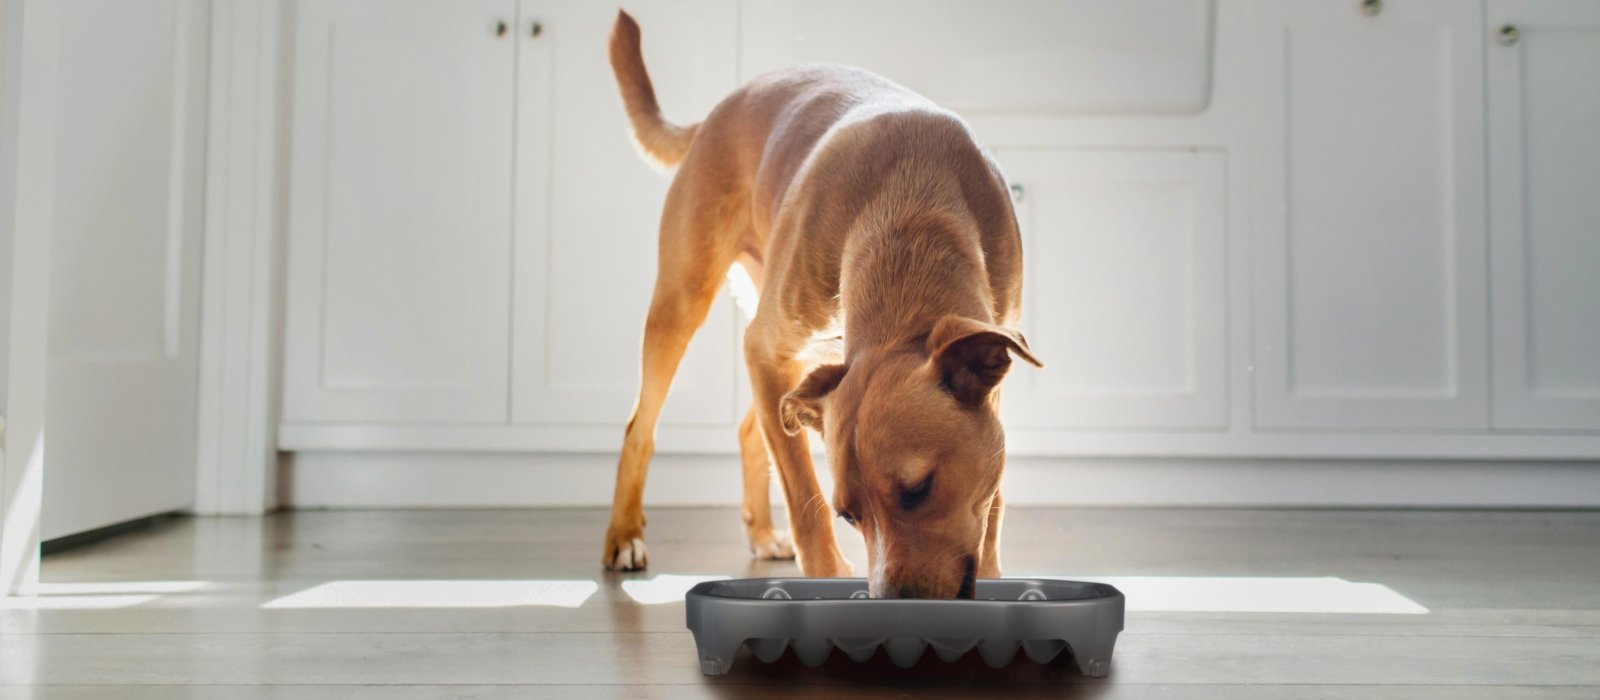 Slow Feeder Dog Bowl, Plastic Anti Vomiting Dog Slow Food Feeding